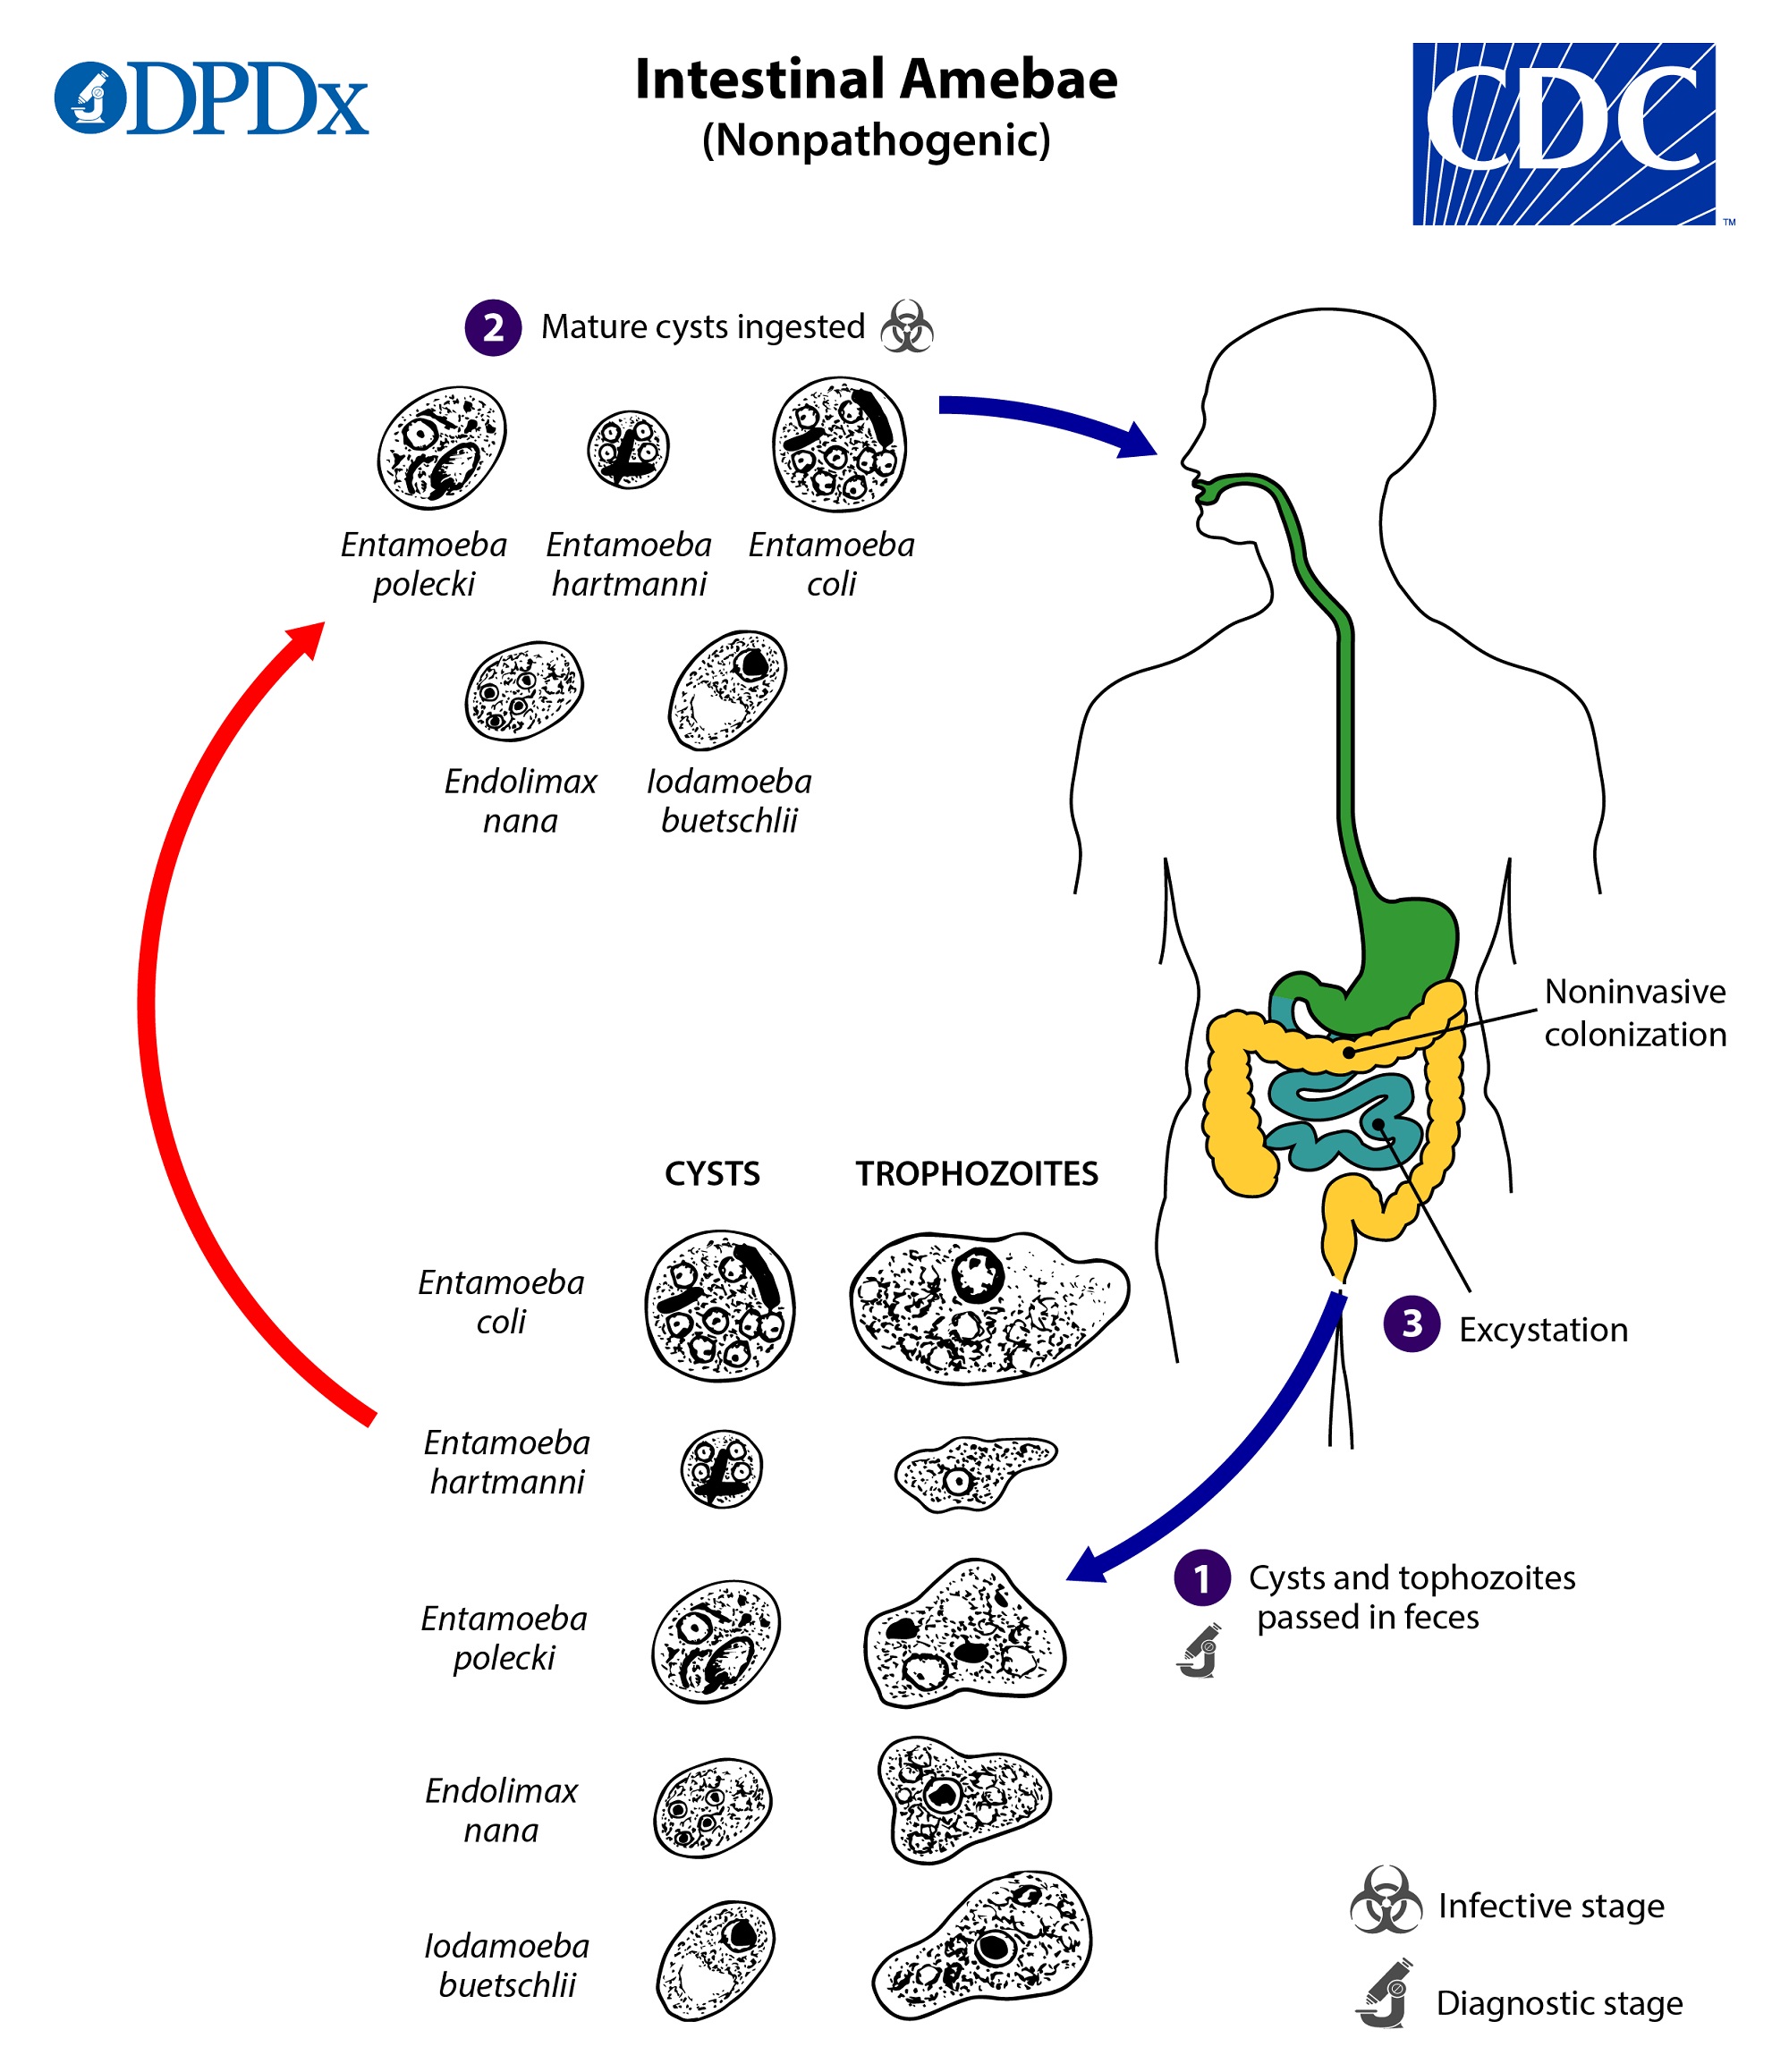 Life cycle of nonpathogenic intestinal amebae include several Entamoeba species (Entamoeba coli, Entamoeba hartmanni, and Entamoeba polecki), Endolimax nana, and Iodamoeba buetschlii (=I